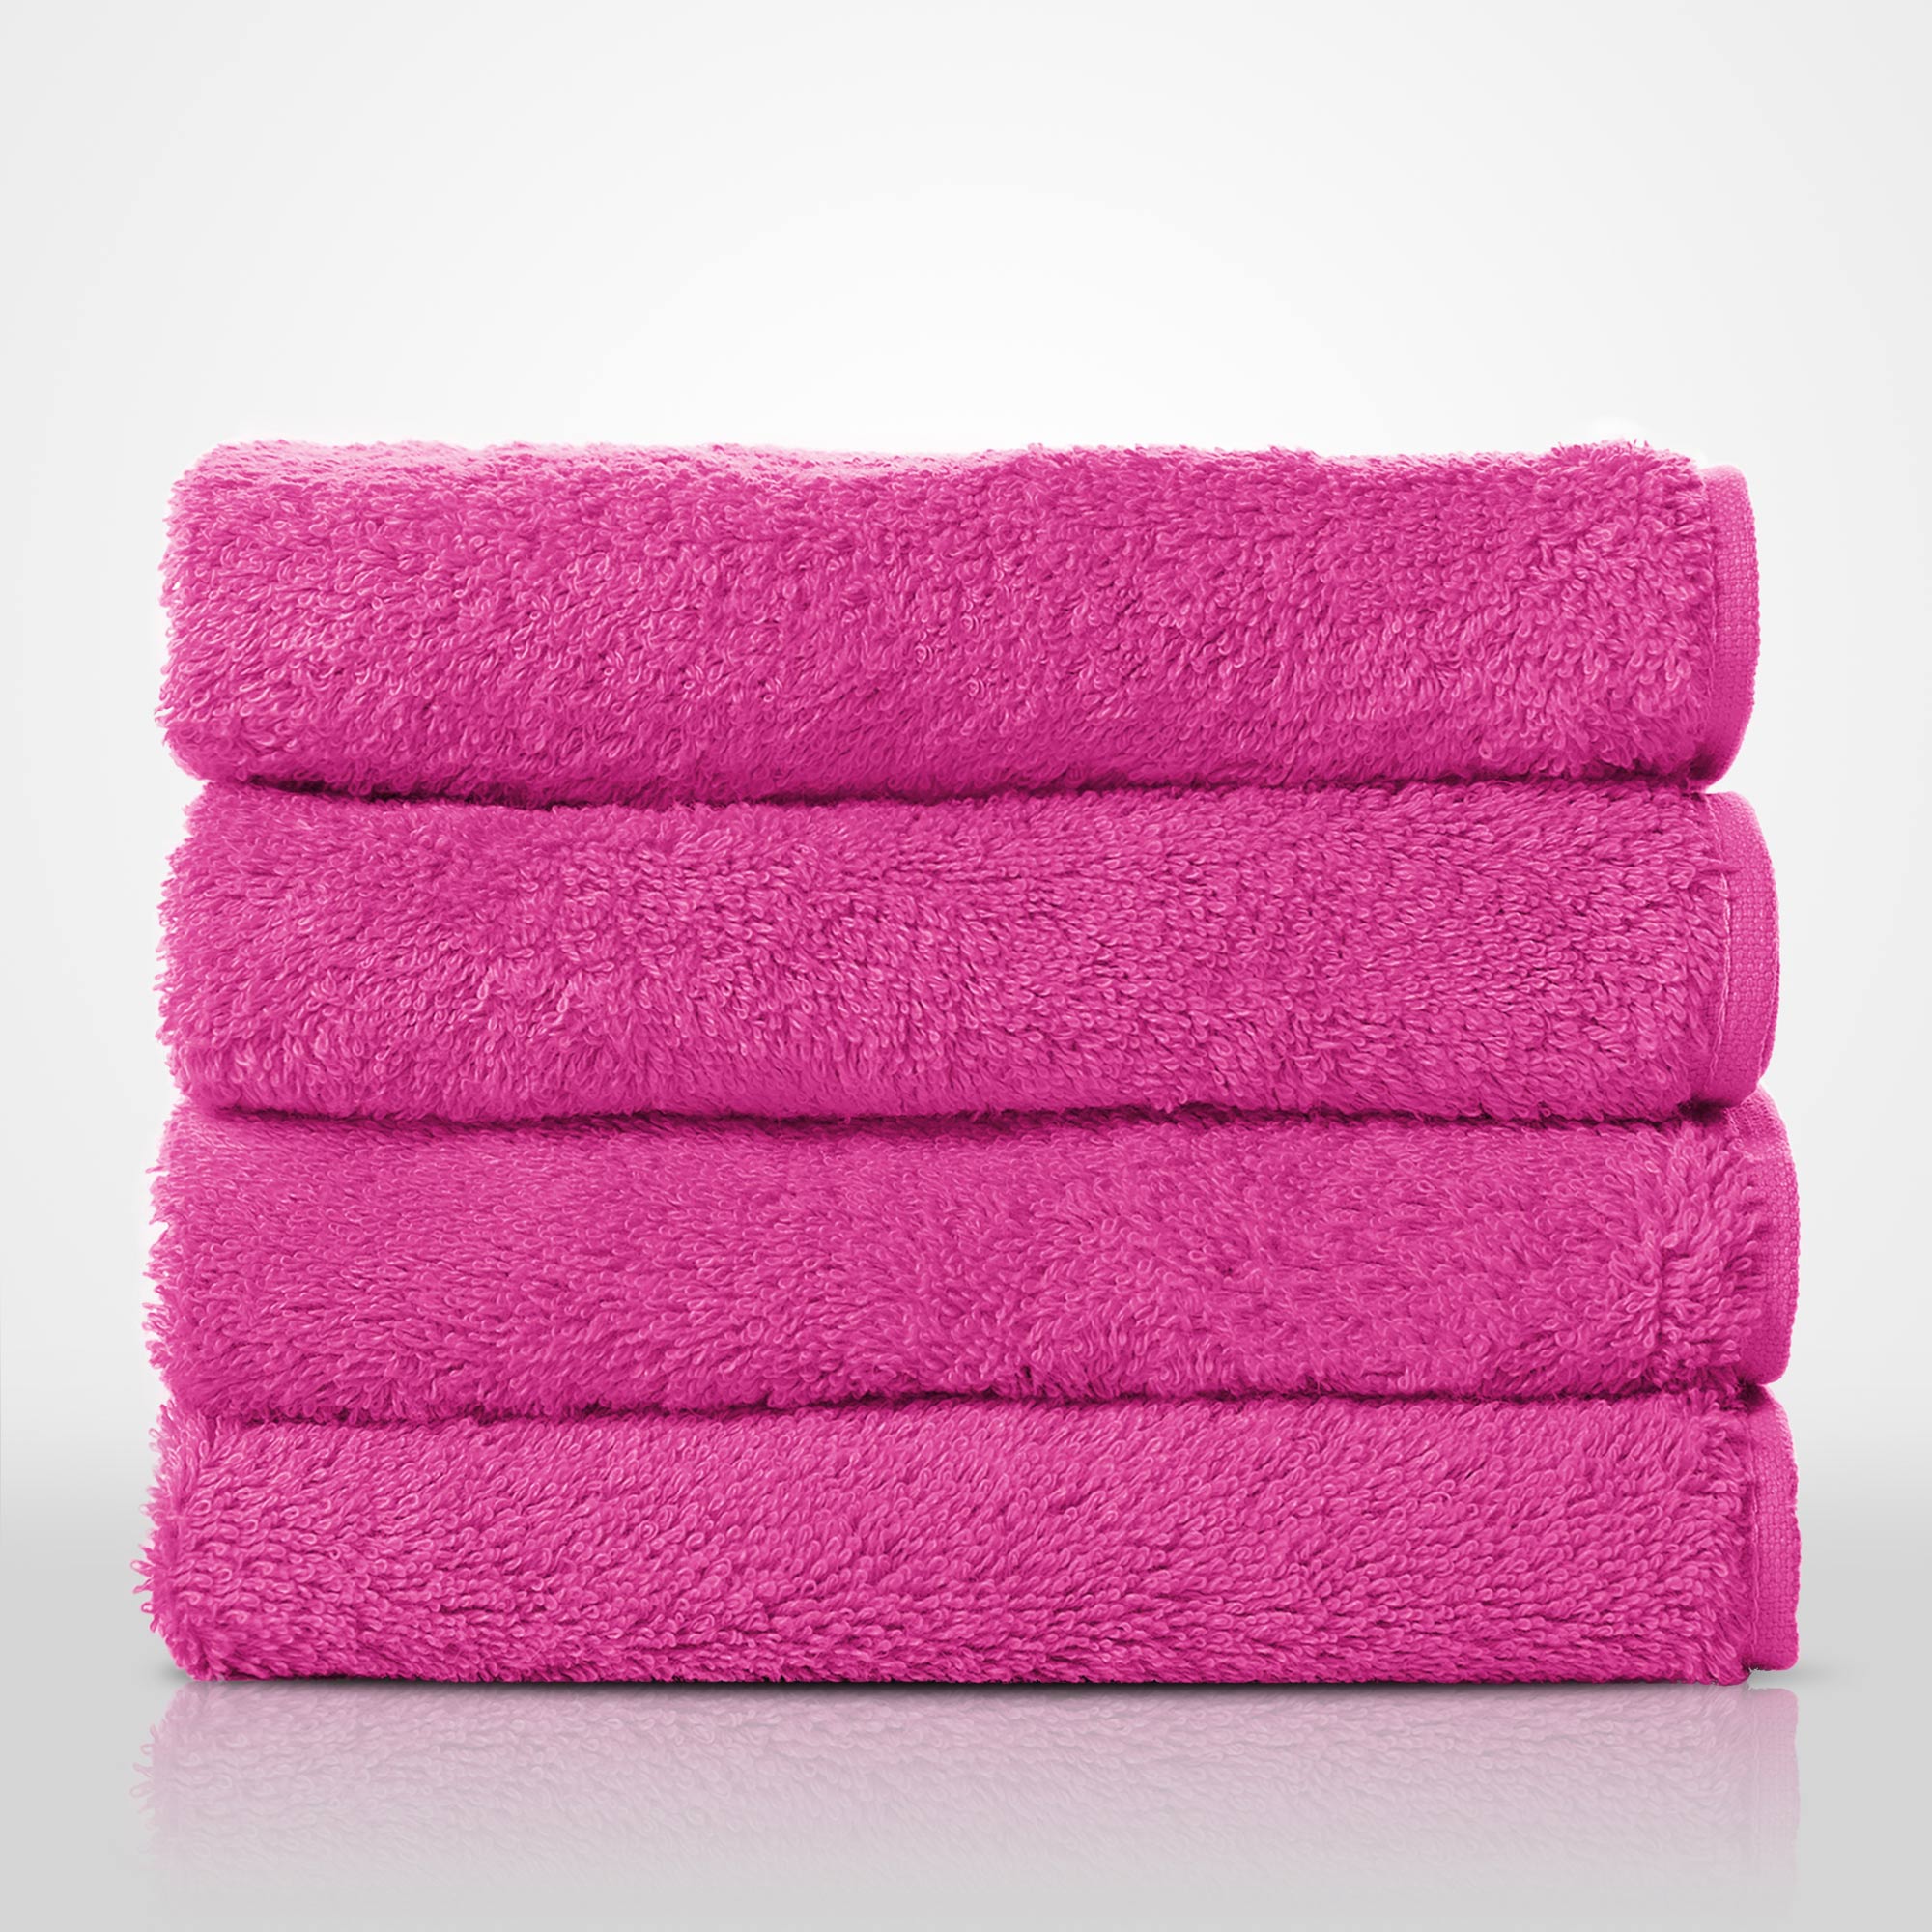 16" x 29" - 100% Turkish Cotton Fuchsia Terry Hand Towel-Robemart.com